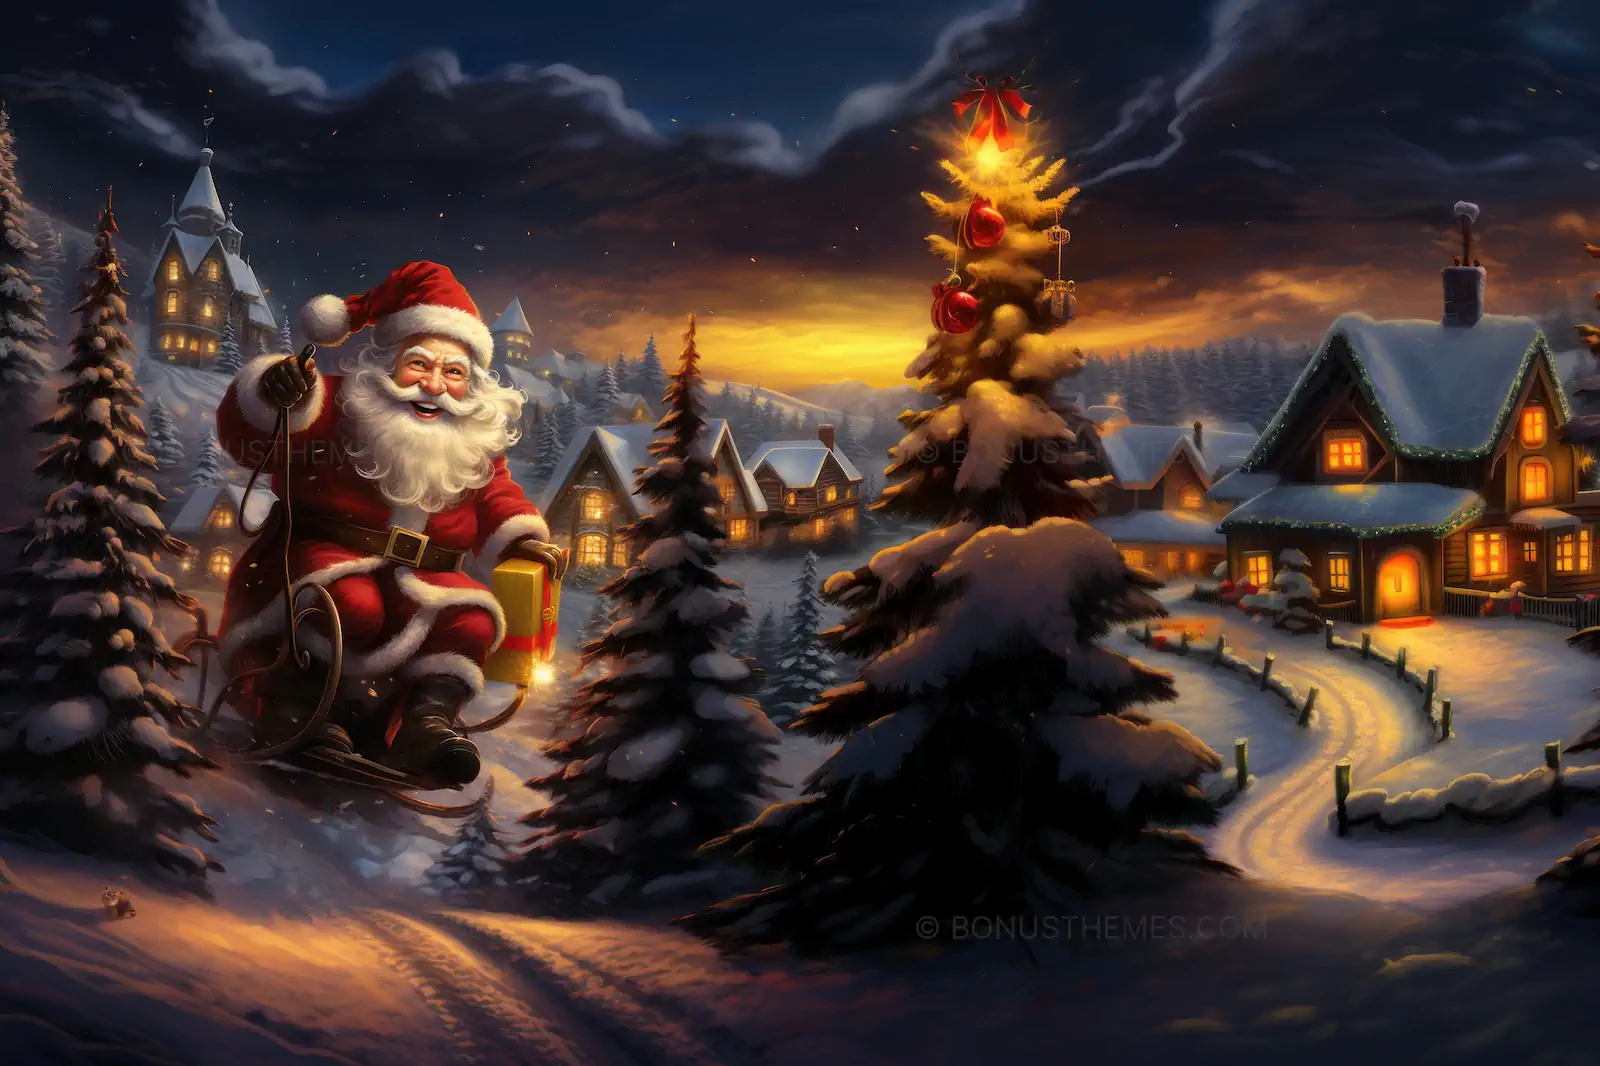 Santa Clause on a sleigh